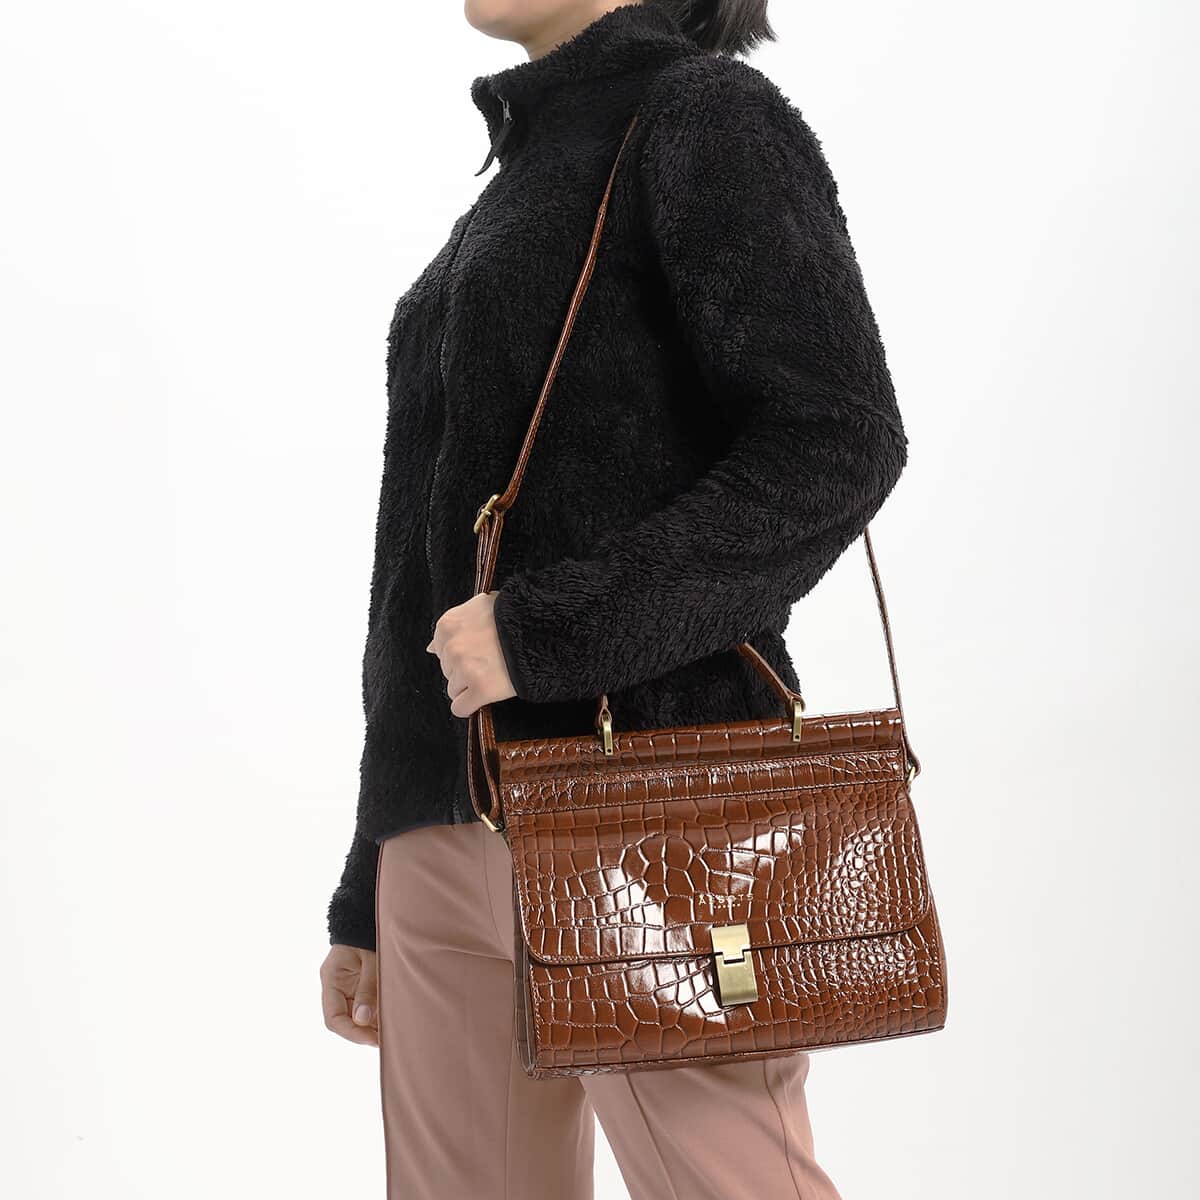 Assots London Tan Genuine Leather Croco Embossed Satchel Bag, Ladies Purse Handbag With Adjustable & Detachable Shoulder Strap And Button Closure (11.61X3.54X9.64) image number 2